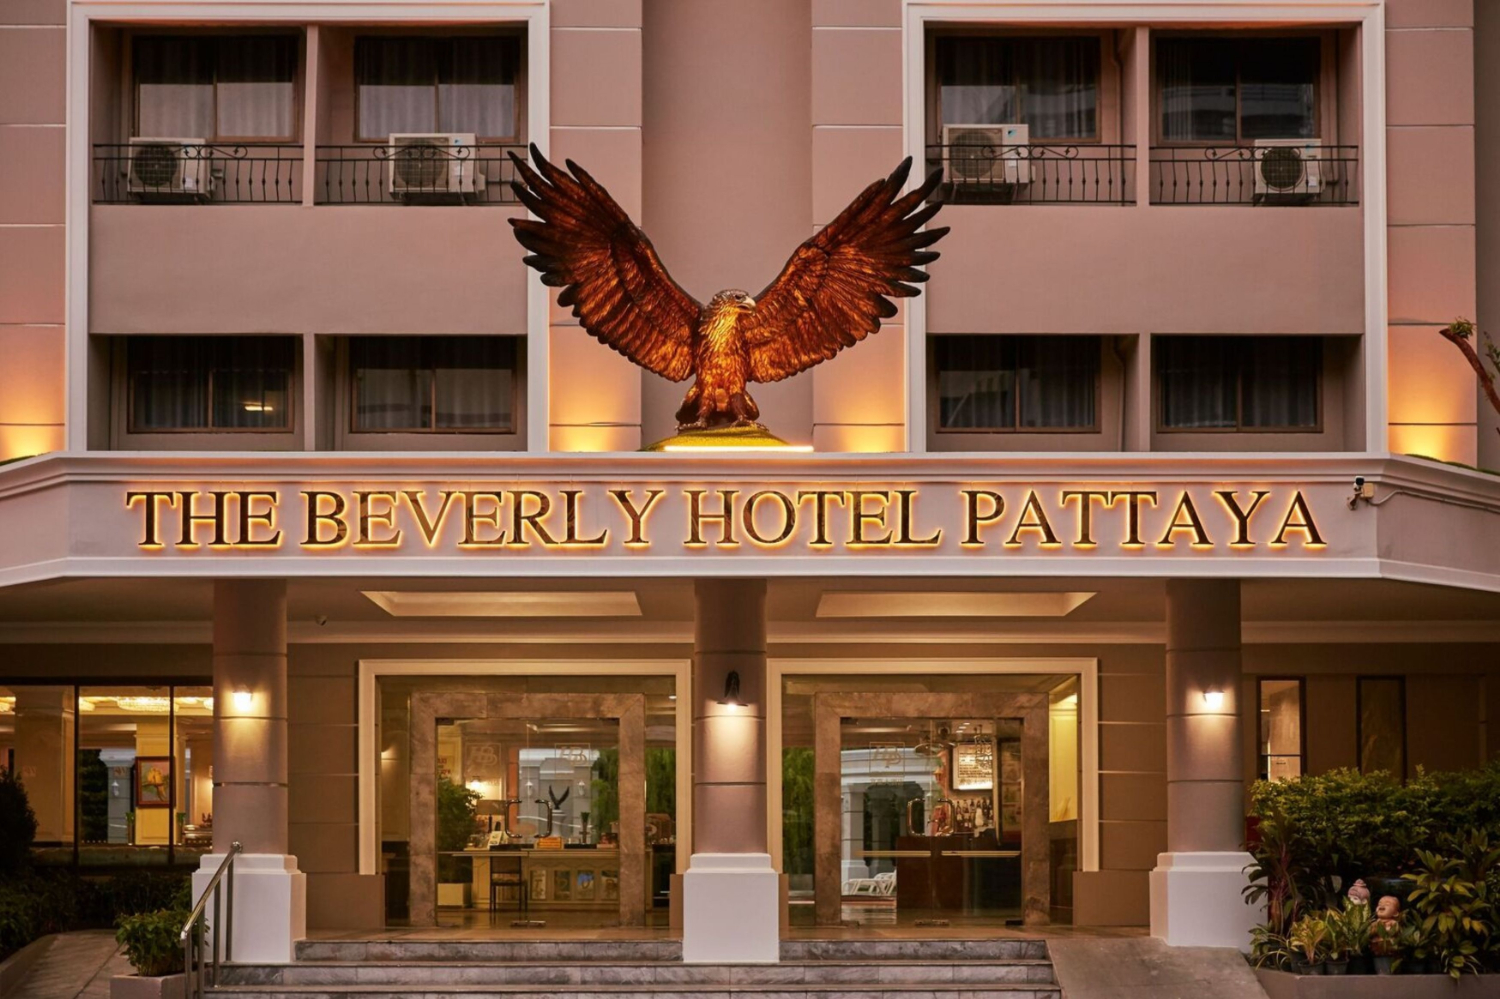 The Beverly Hotel Pattaya - Image 2